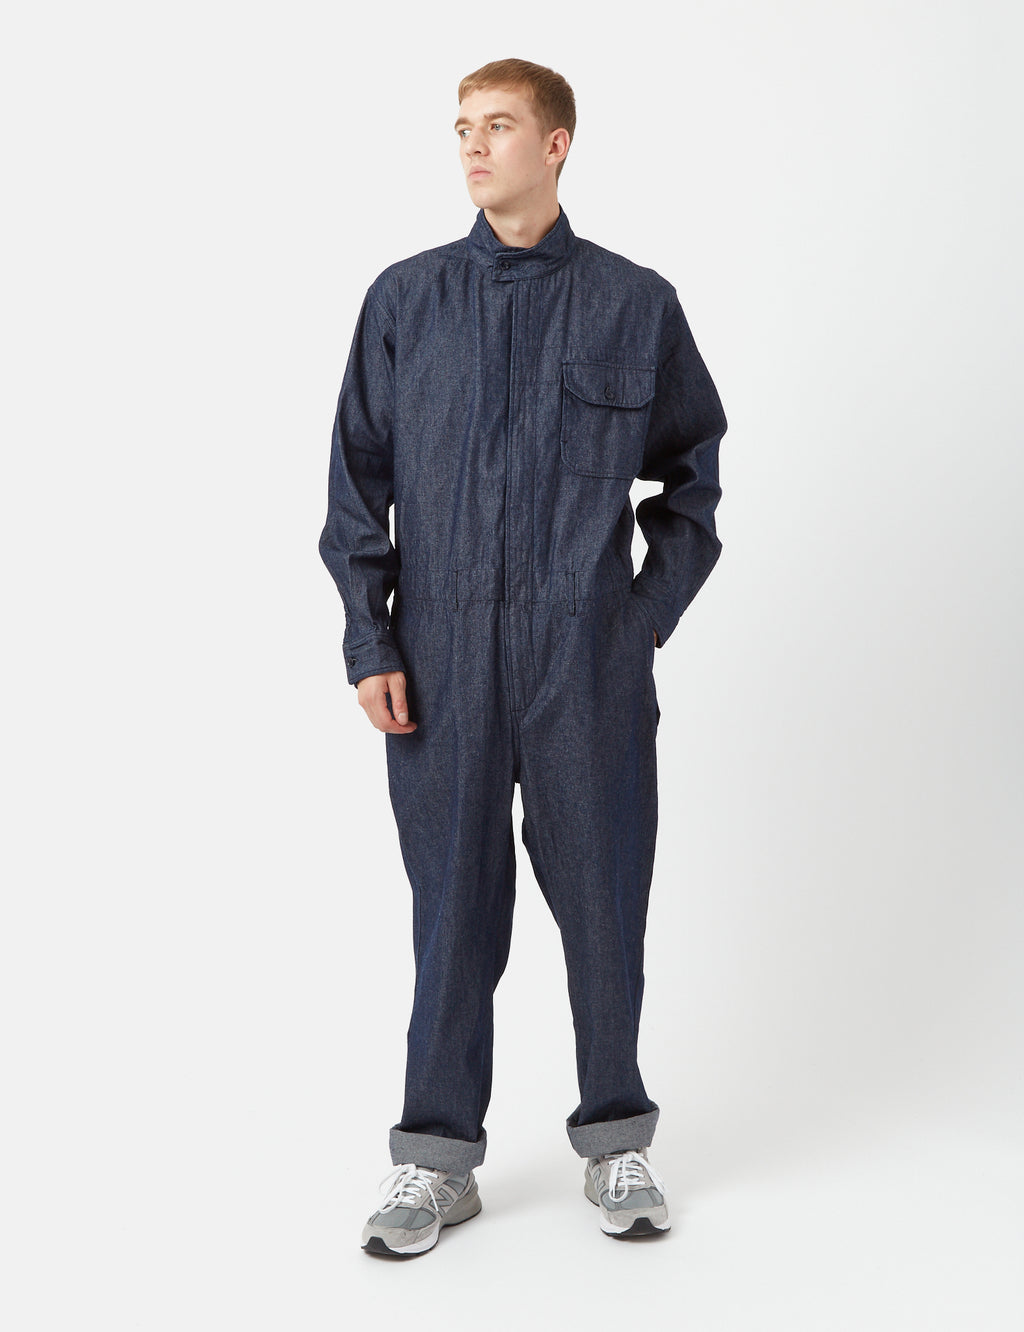 Engineered Garments Racing Suit (8oz Denim) - Indigo Blue I Article.